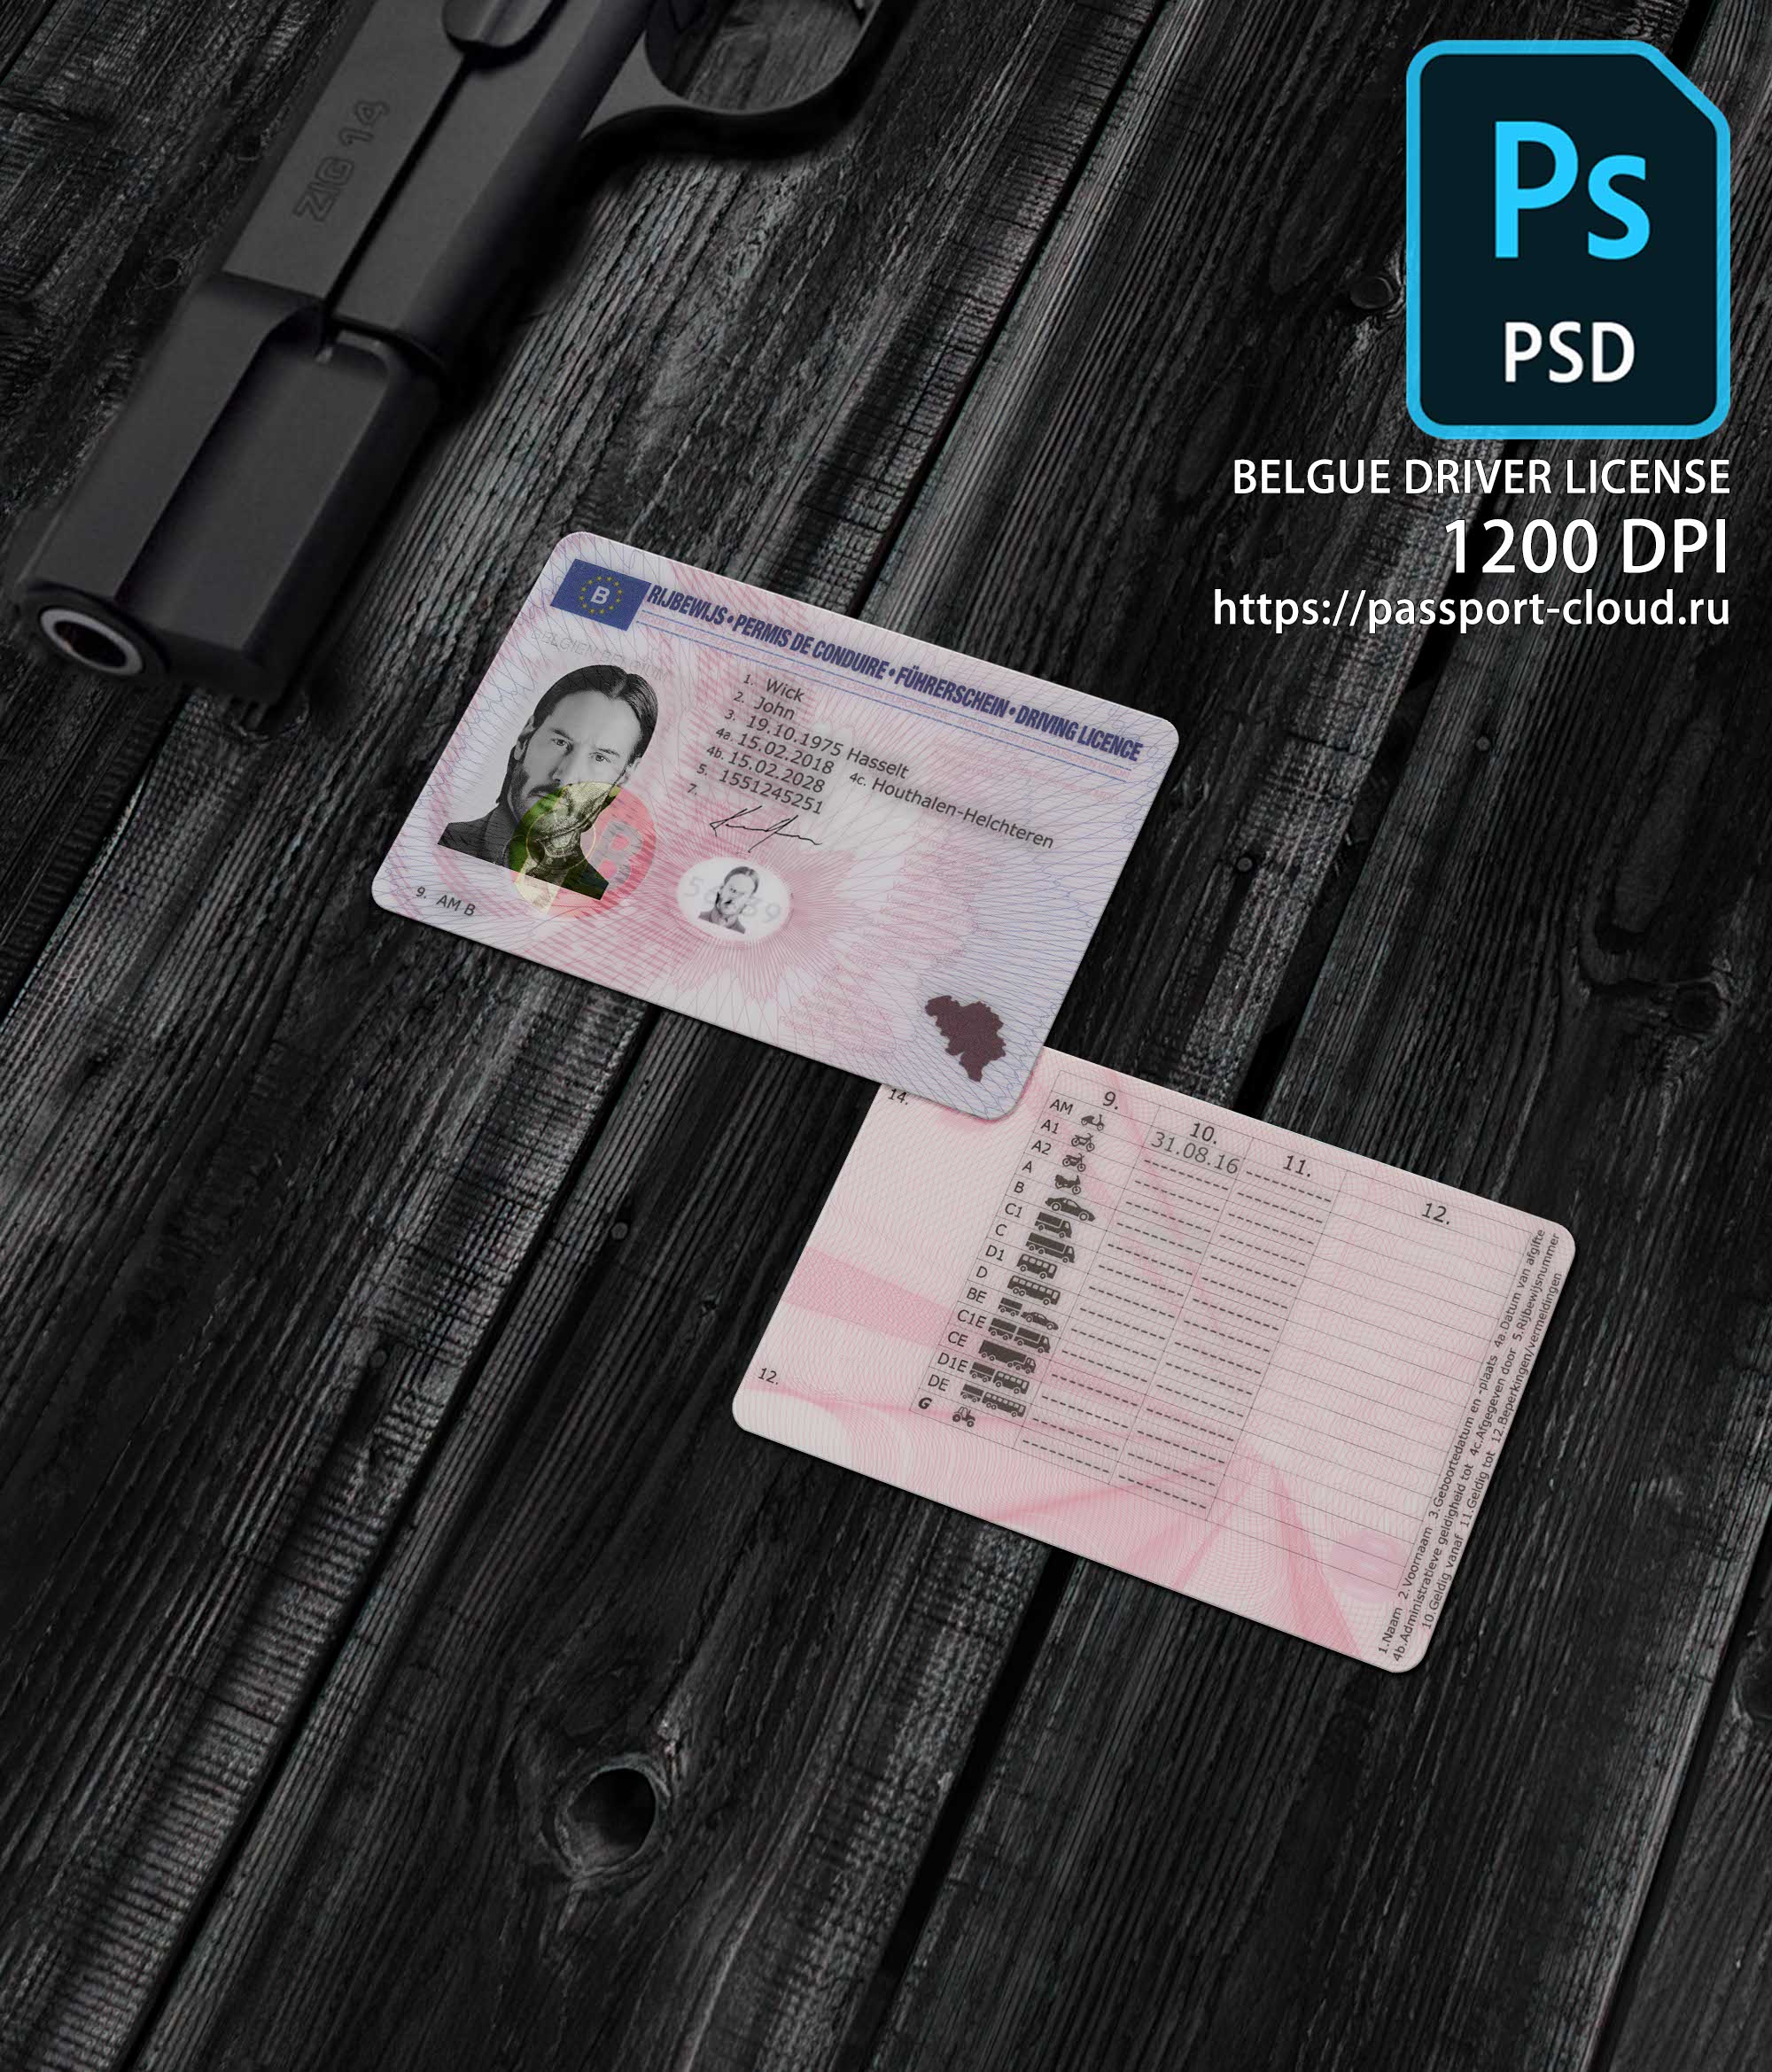 Belgue Driver License 2013+ 1